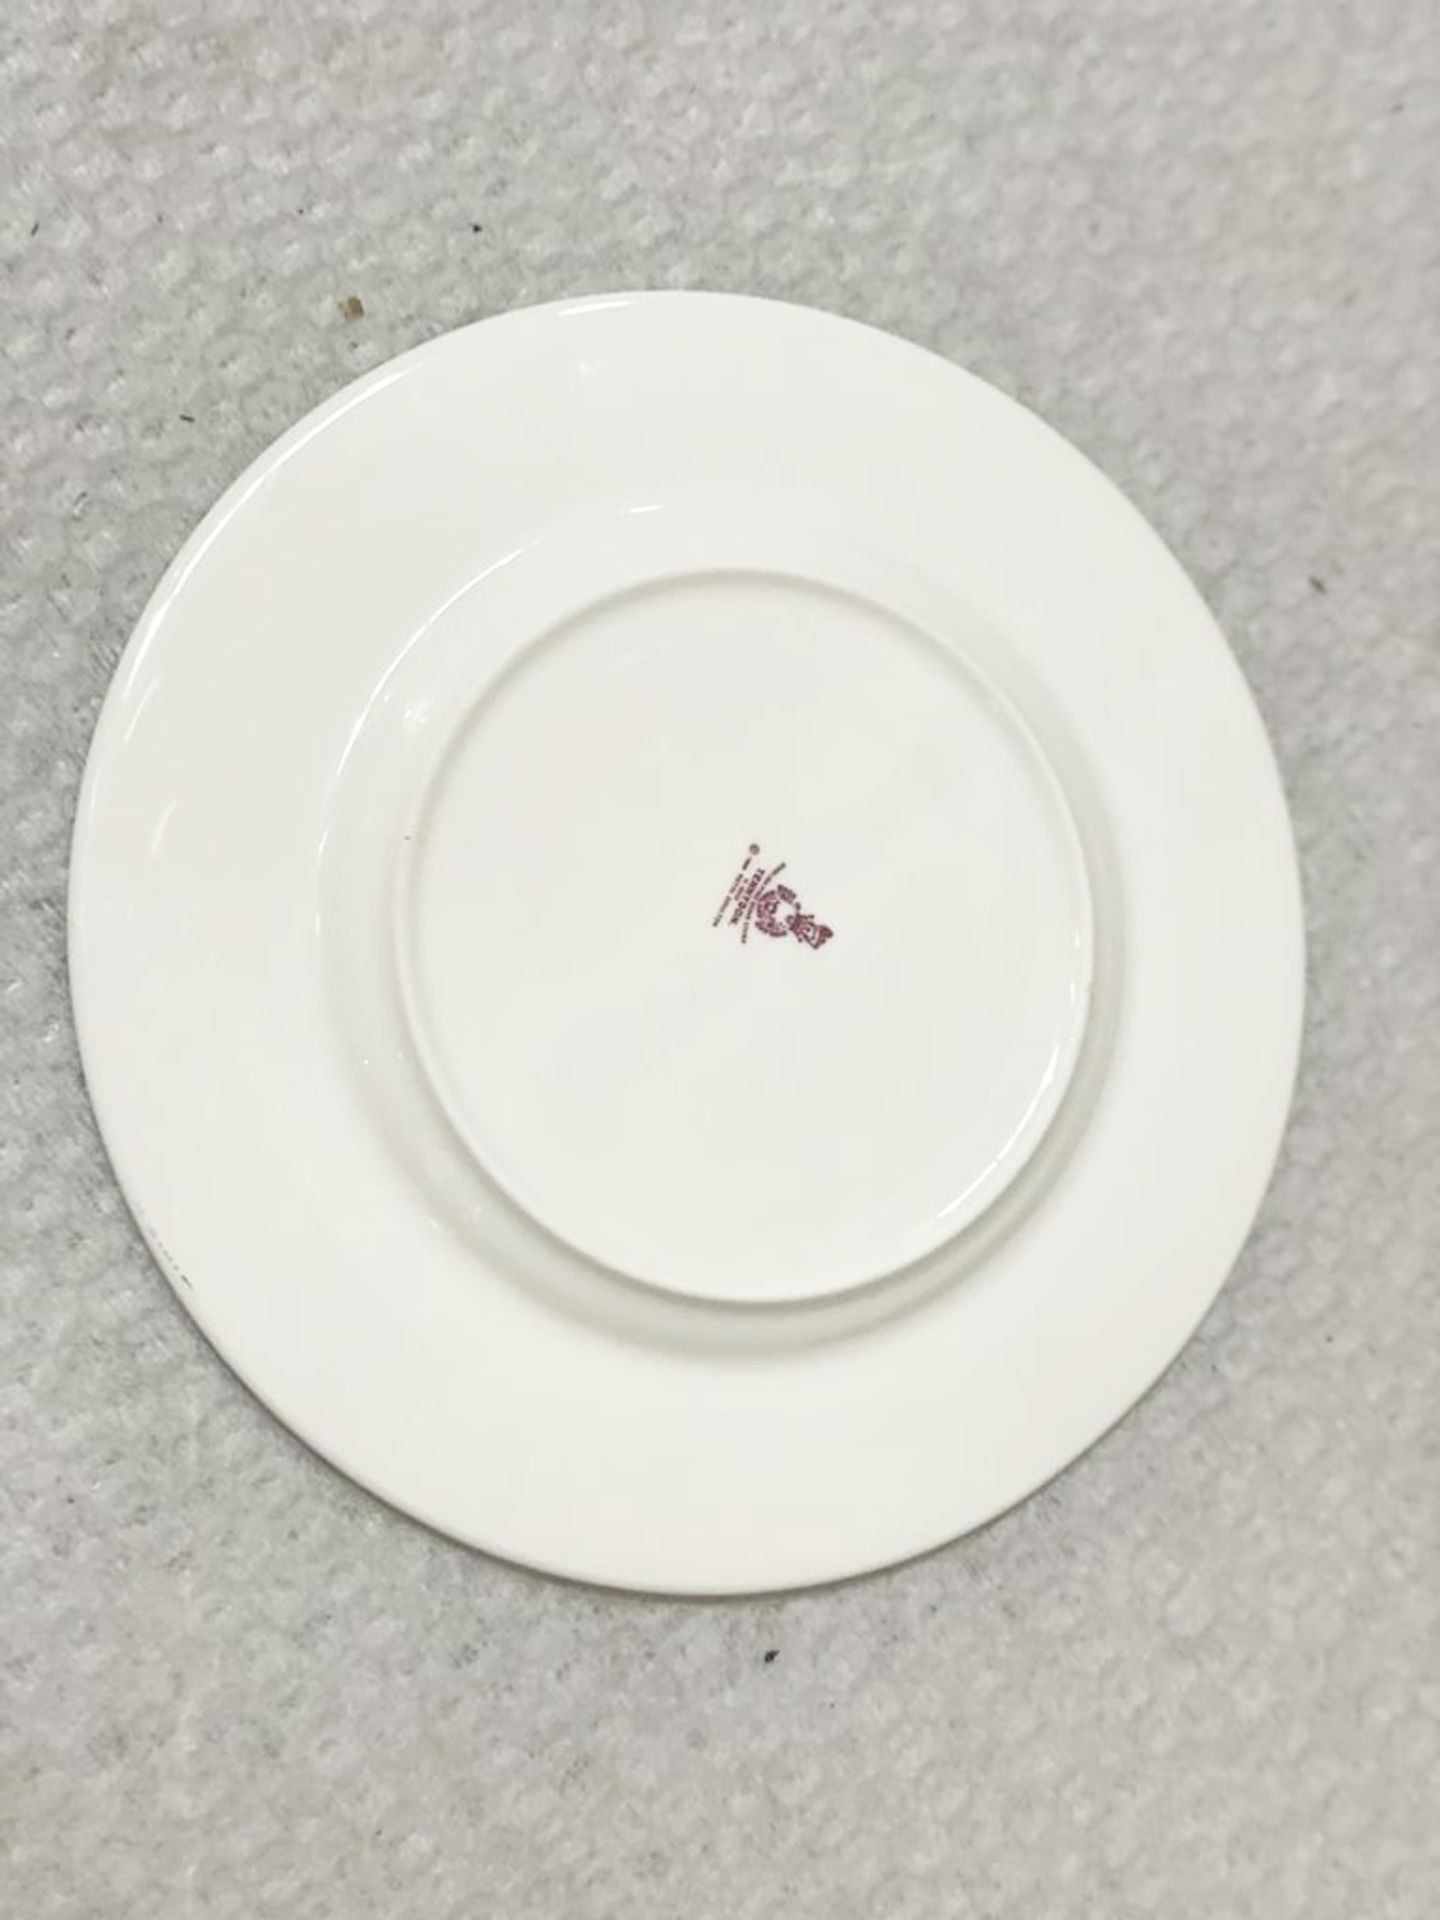 1 x Tennyson Royal Doulton Set Of Plates - Ref: AUR127 - CL652 - Location: Altrincham WA14 16 x - Image 5 of 13